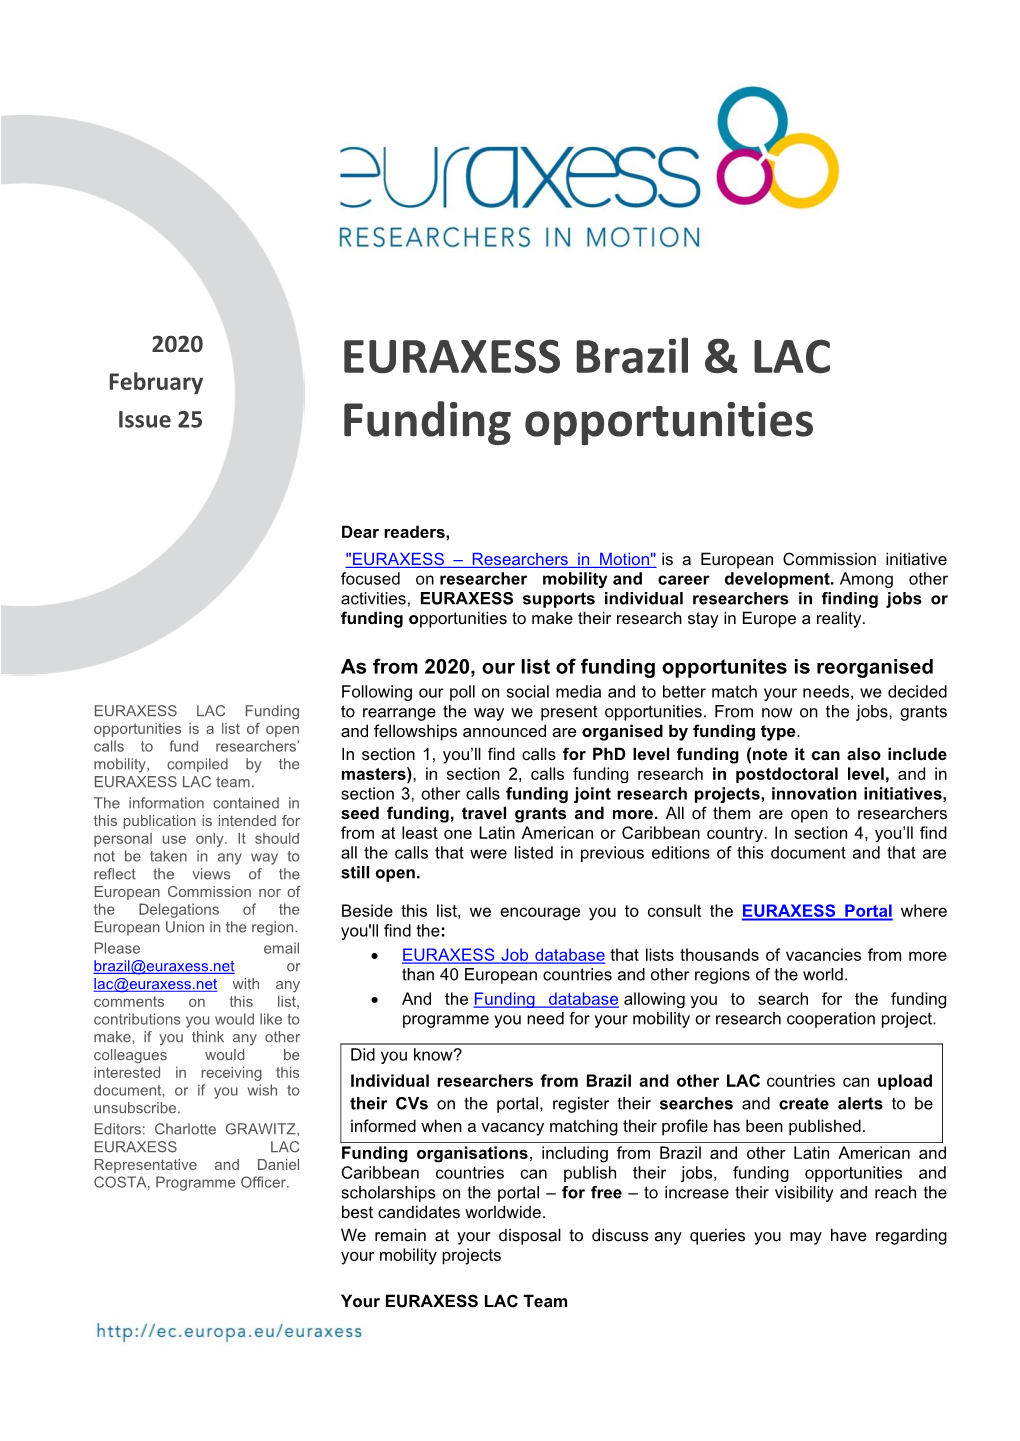 EURAXESS Brazil & LAC Funding Opportunities February 2020